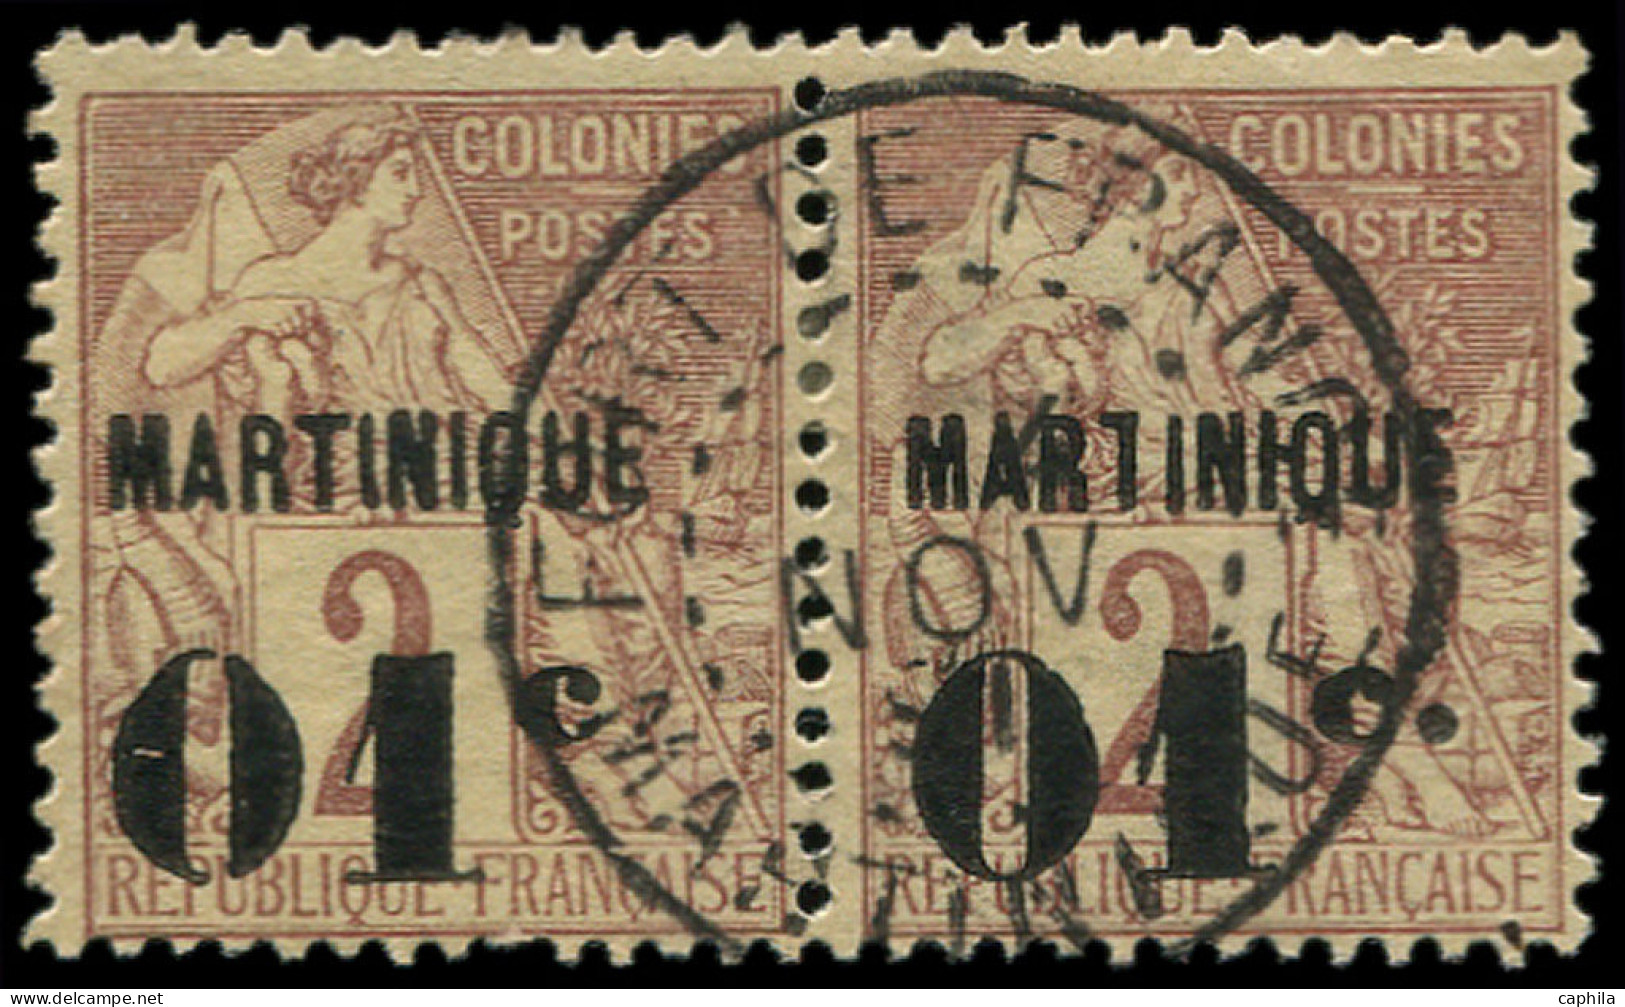 O MARTINIQUE - Poste - 7c, Paire Dont 1 Ex. Sans Le Point - Used Stamps